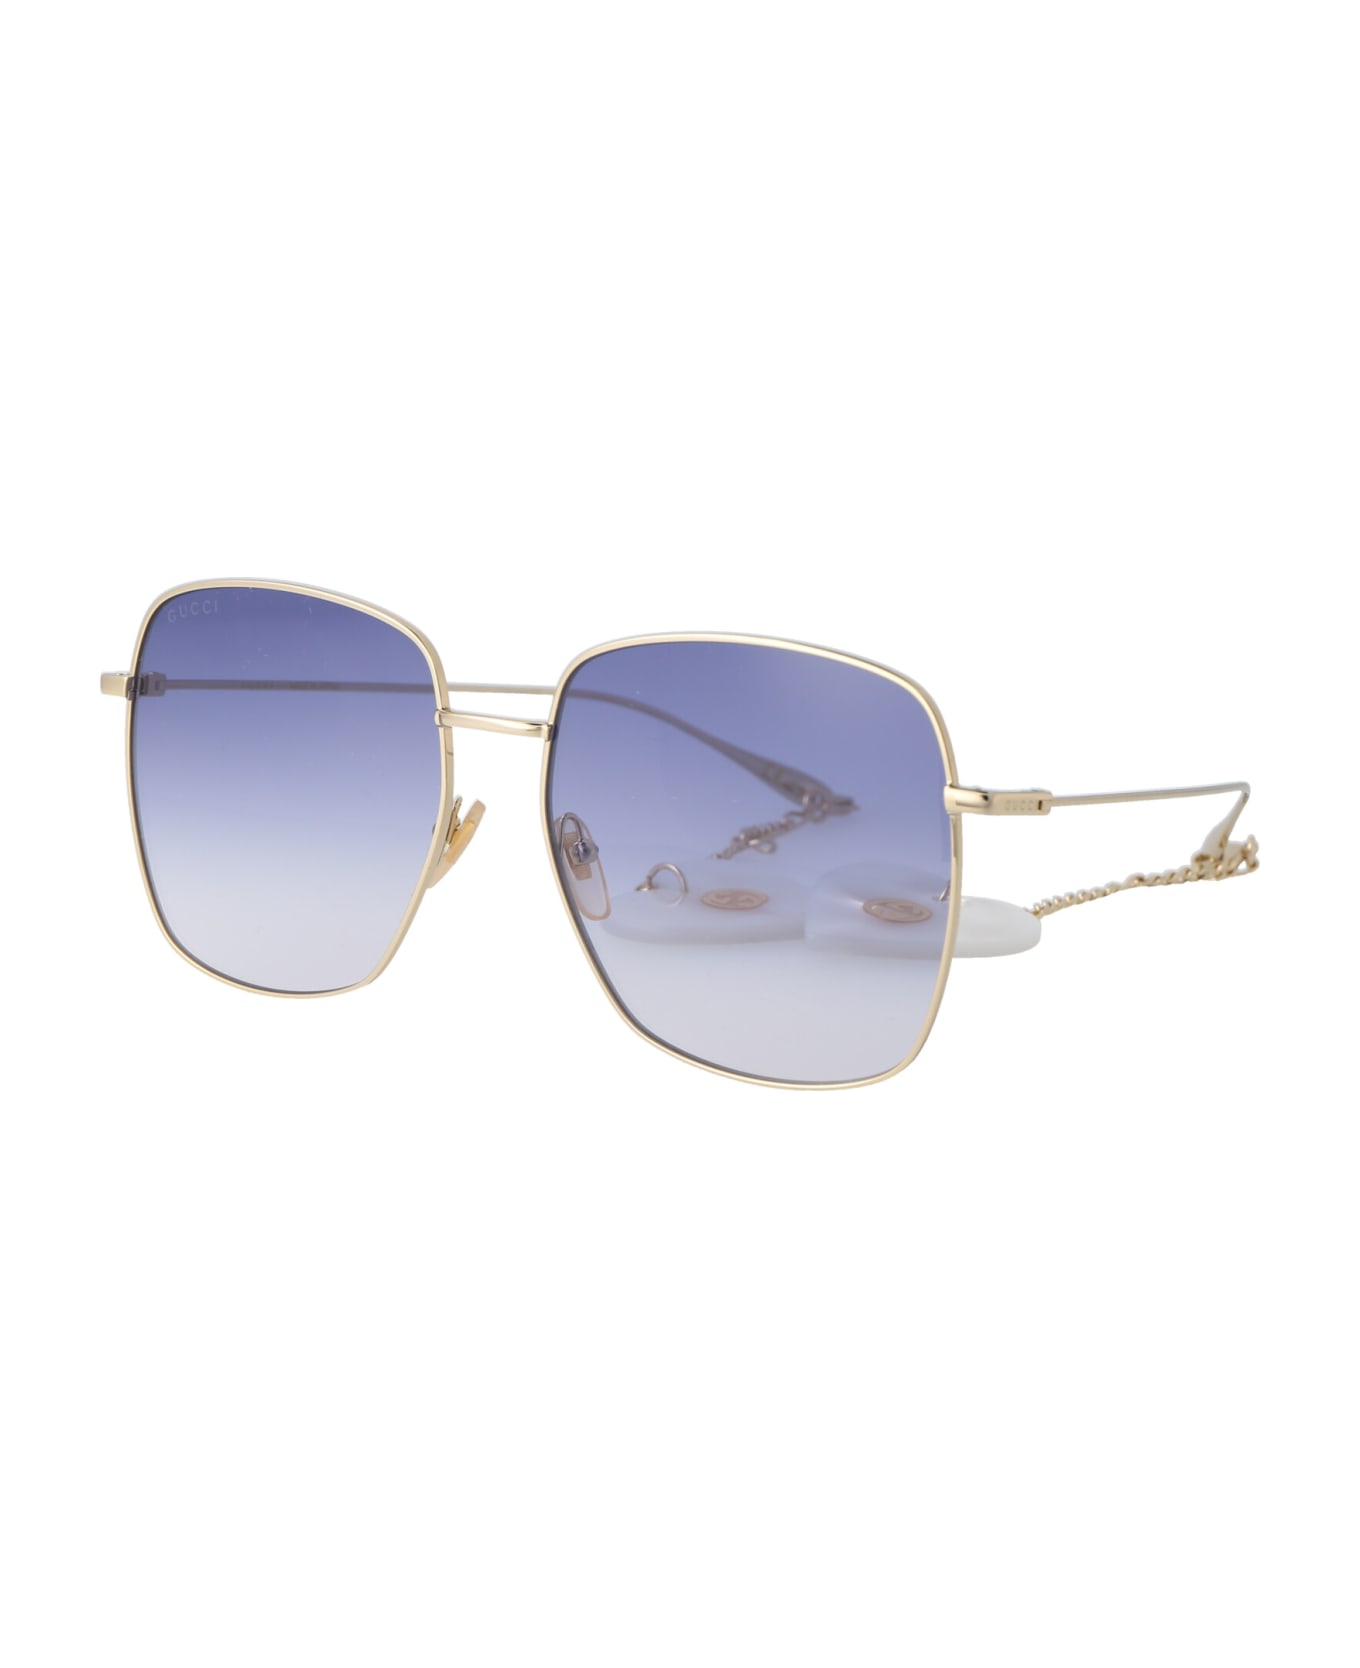 Gucci Eyewear Gg1031s Sunglasses - 004 GOLD GOLD VIOLET サングラス